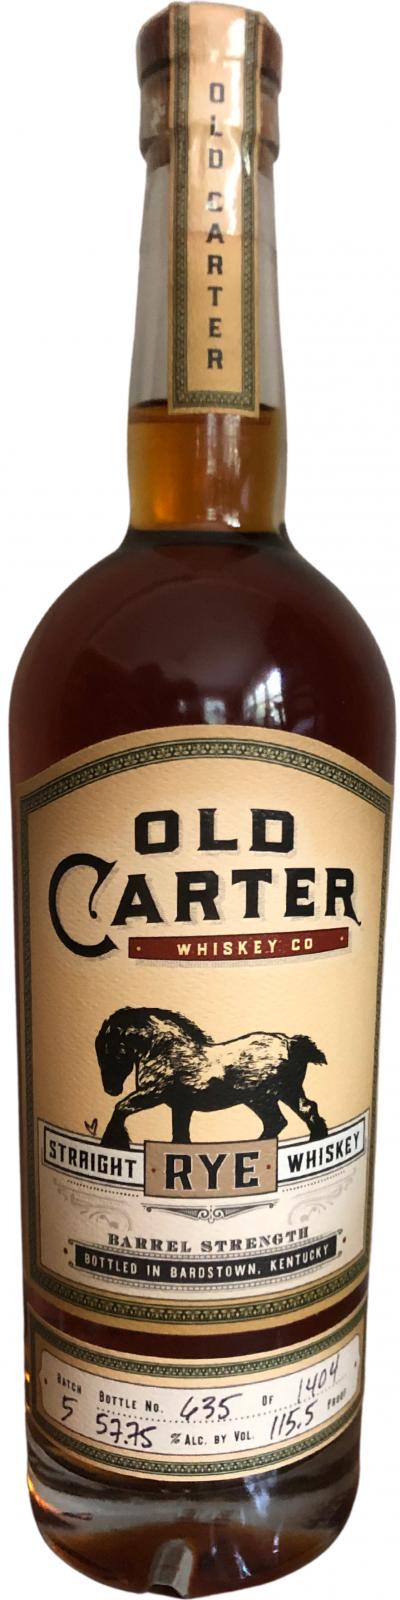 Old Carter Straight Rye Whisky Barrel Strength 57.75% 750ml